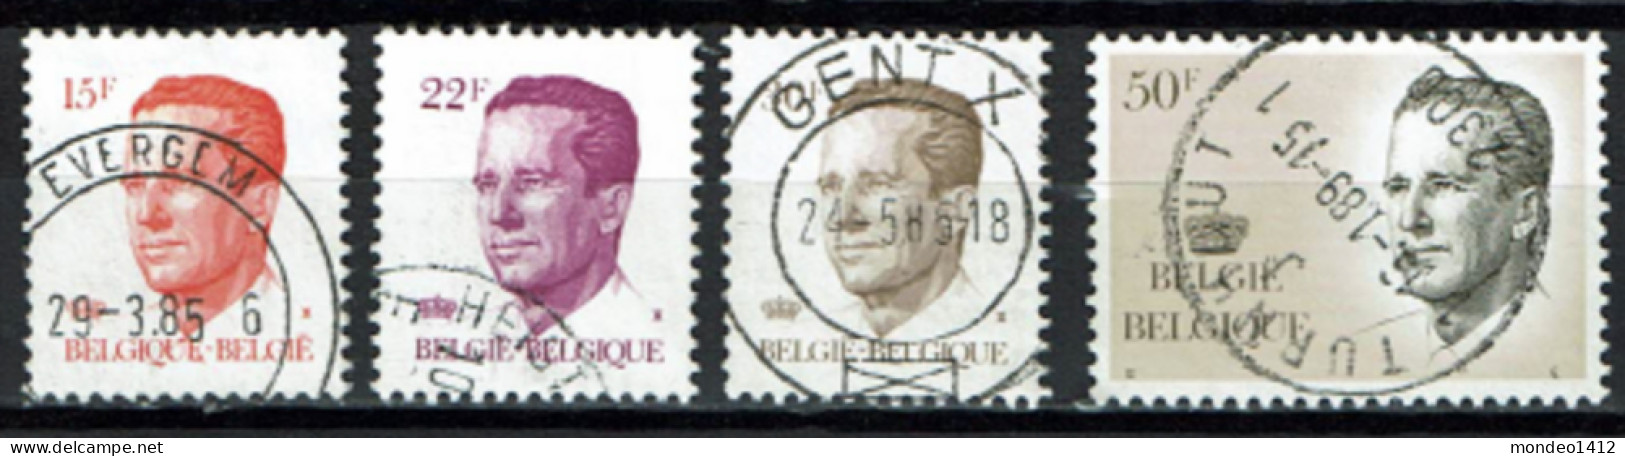 België 1984 OBP 2124/2127 - Série Courante Baudouin "Velghe" - Gebruikt